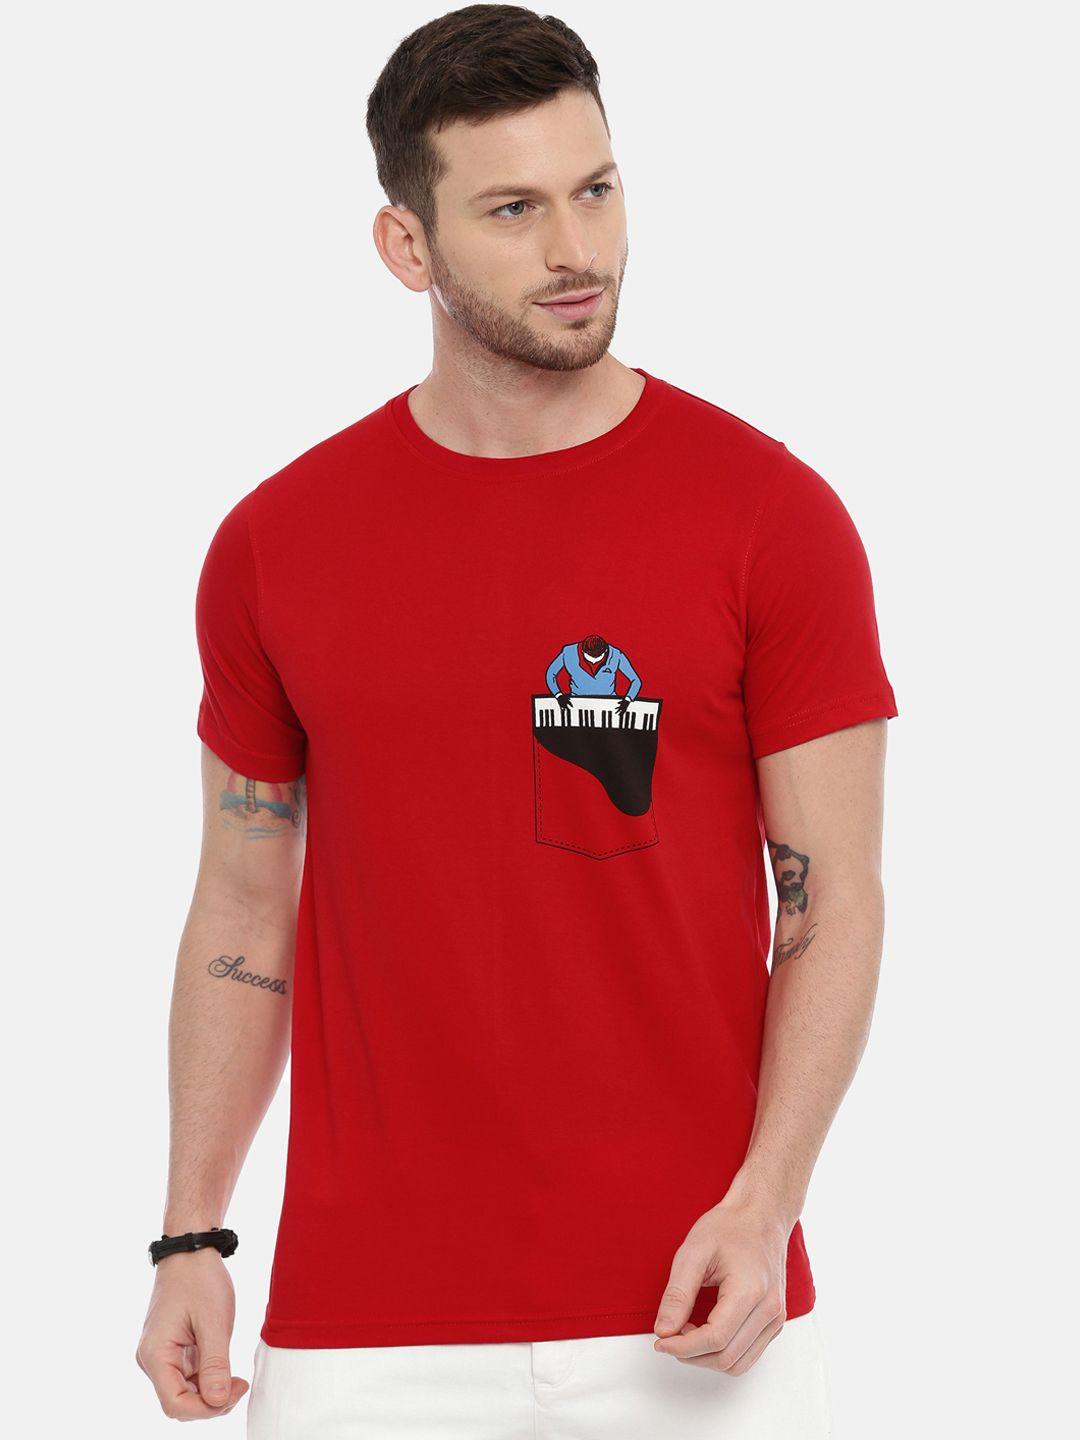 bushirt men red  black printed round neck pure cotton t-shirt